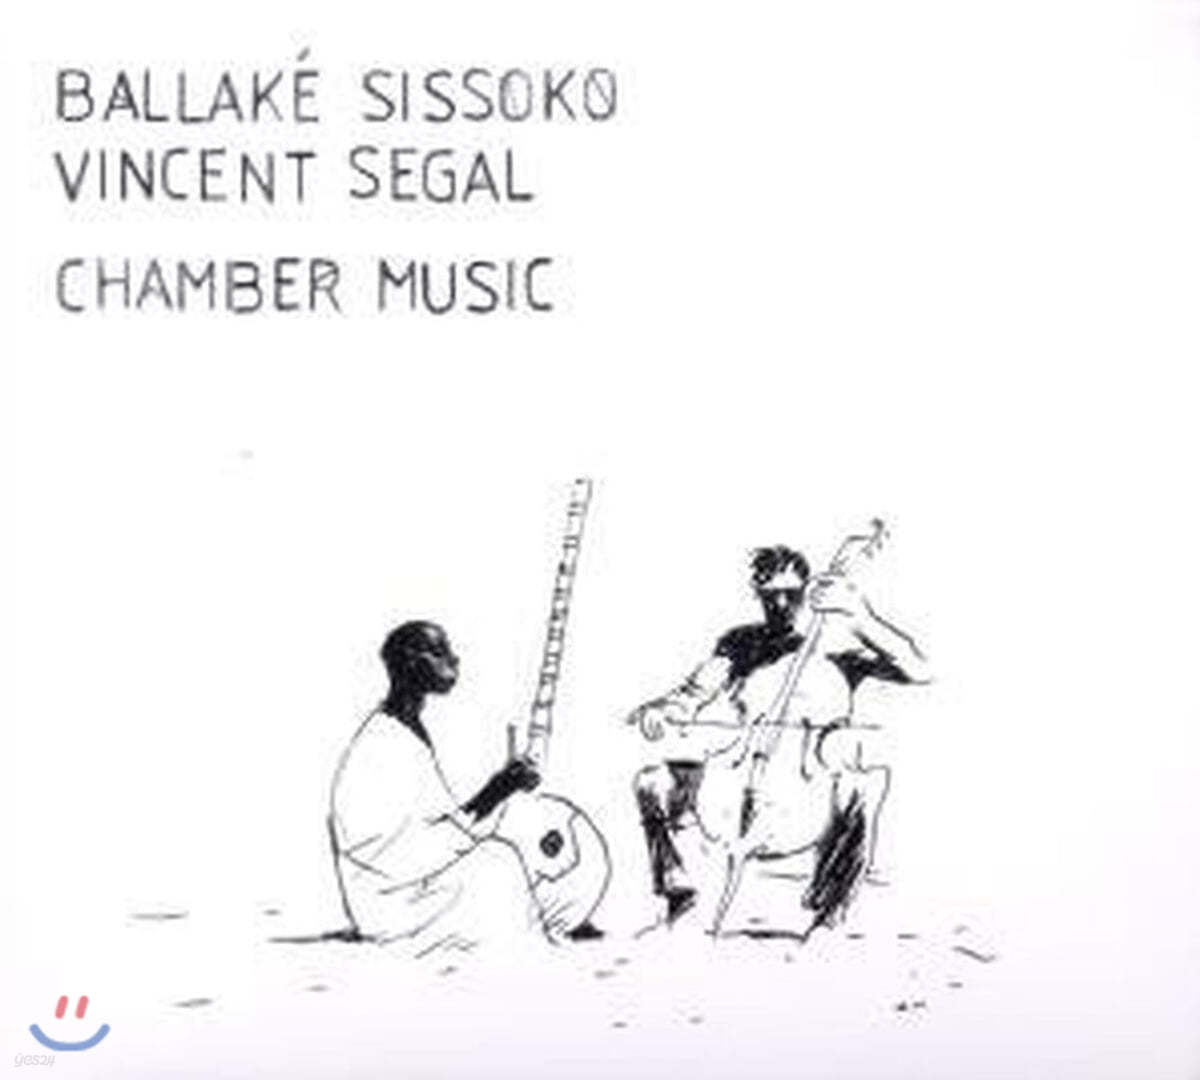 Ballake Sissoko / Vincent Segal - Chamber Music